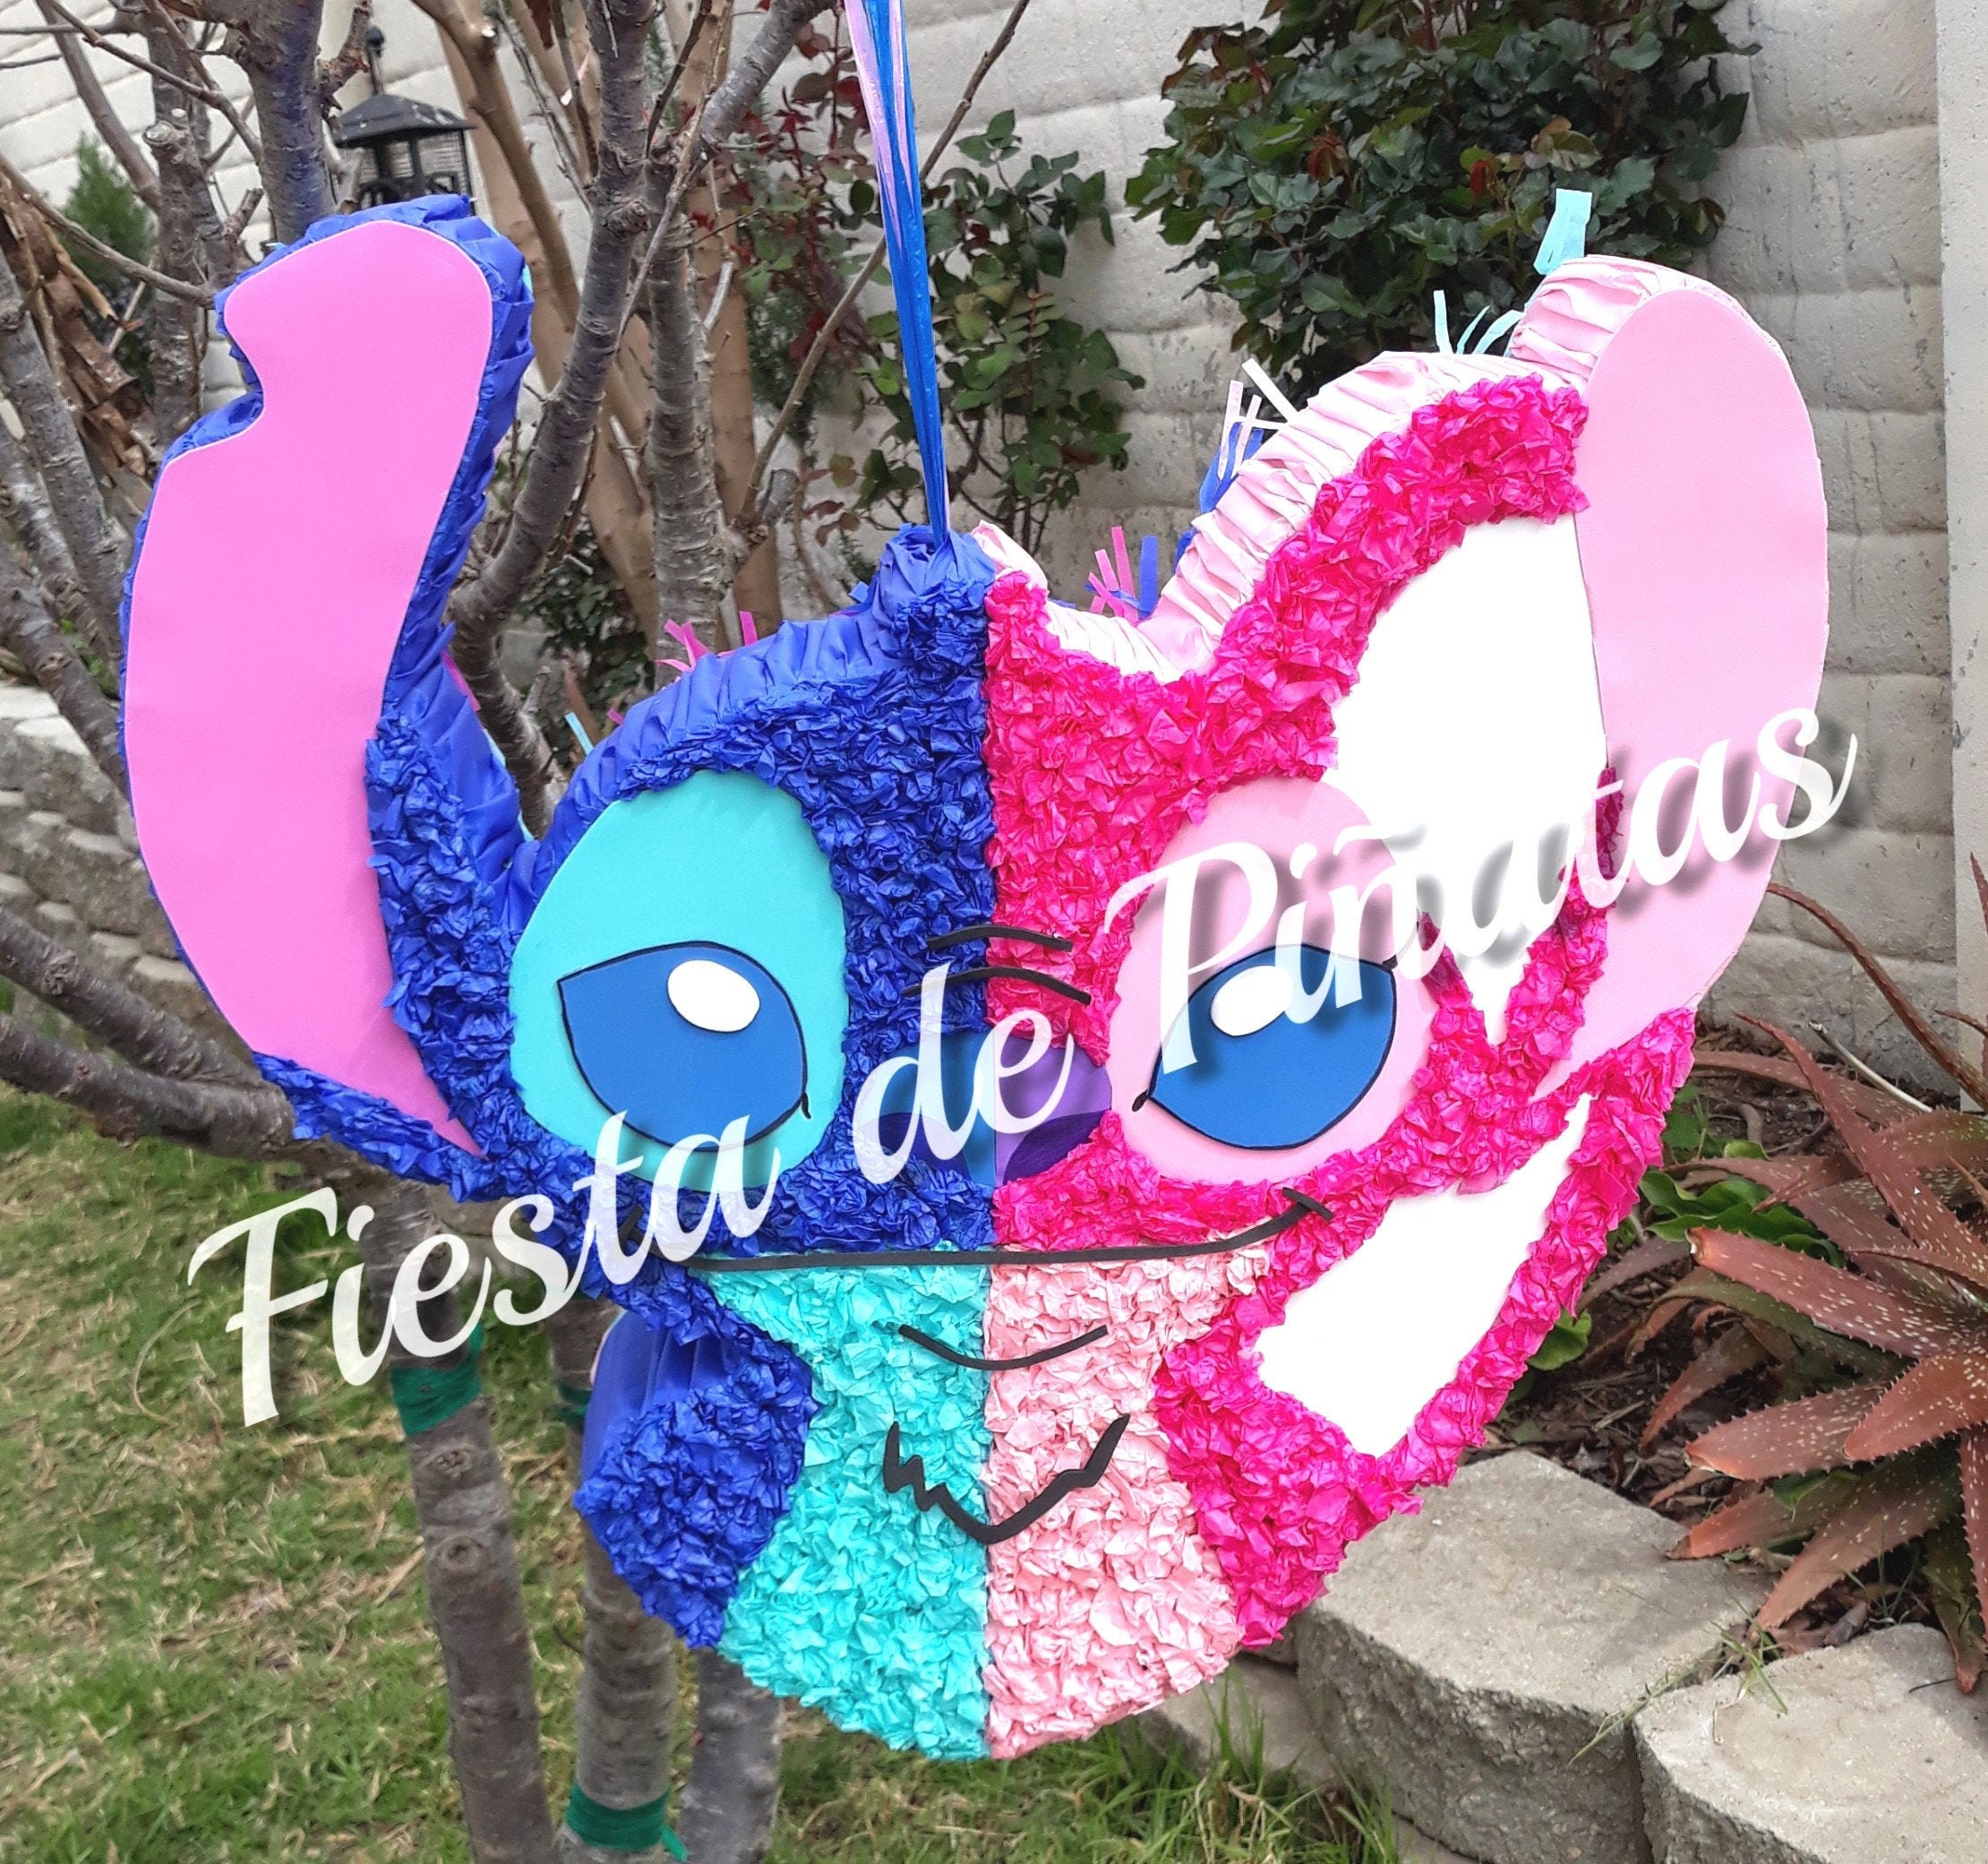 PIÑATA STITCH/ANGEL 💙🩷 #benditapiñata #piñatastitch #piñataangel  #piñatasargentina #piñatastitchyangel